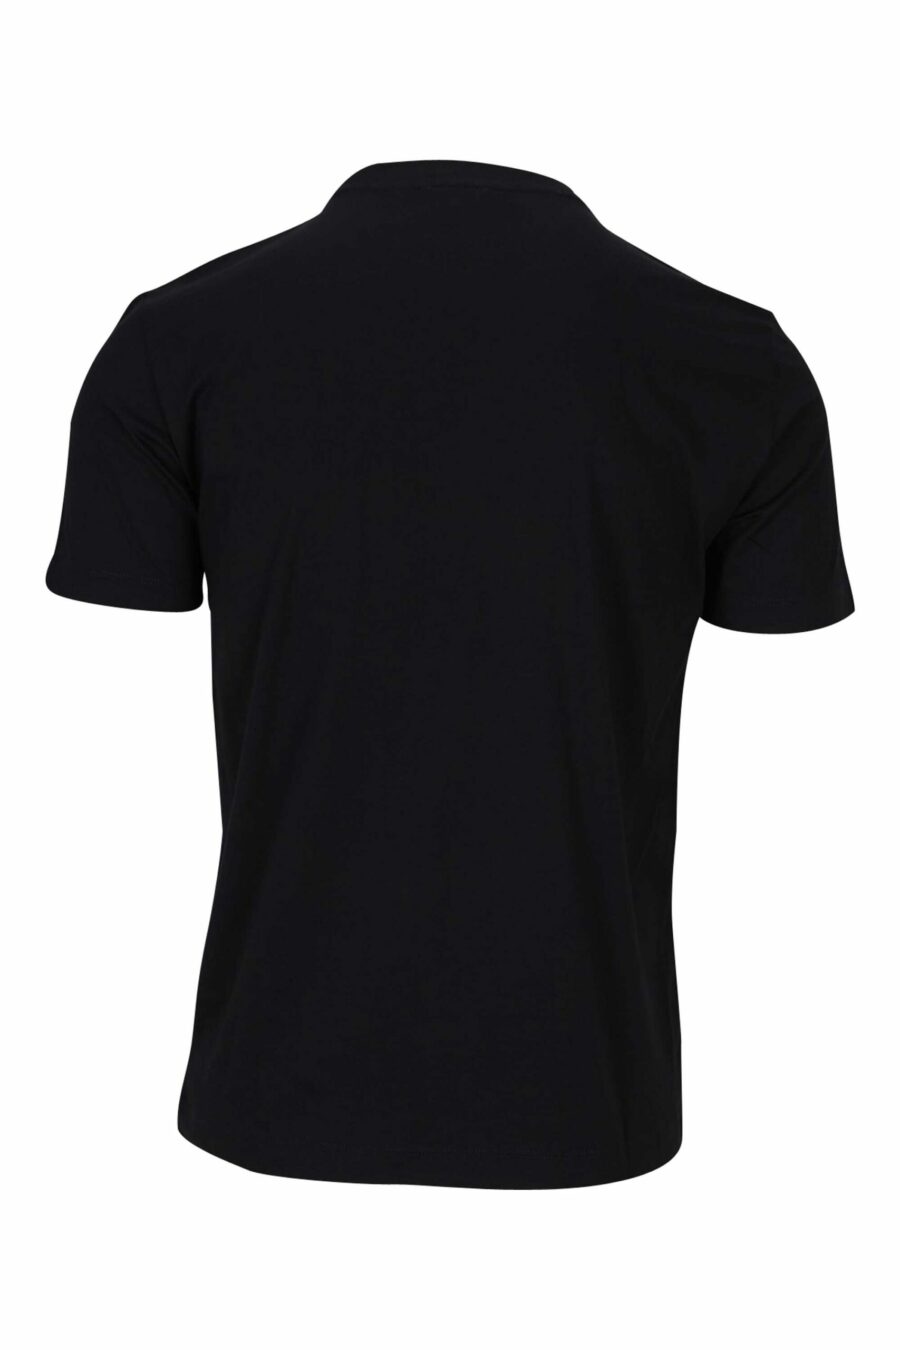 Black T-shirt with "lux identity" maxilogo in grey - 8056787953321 1 scaled